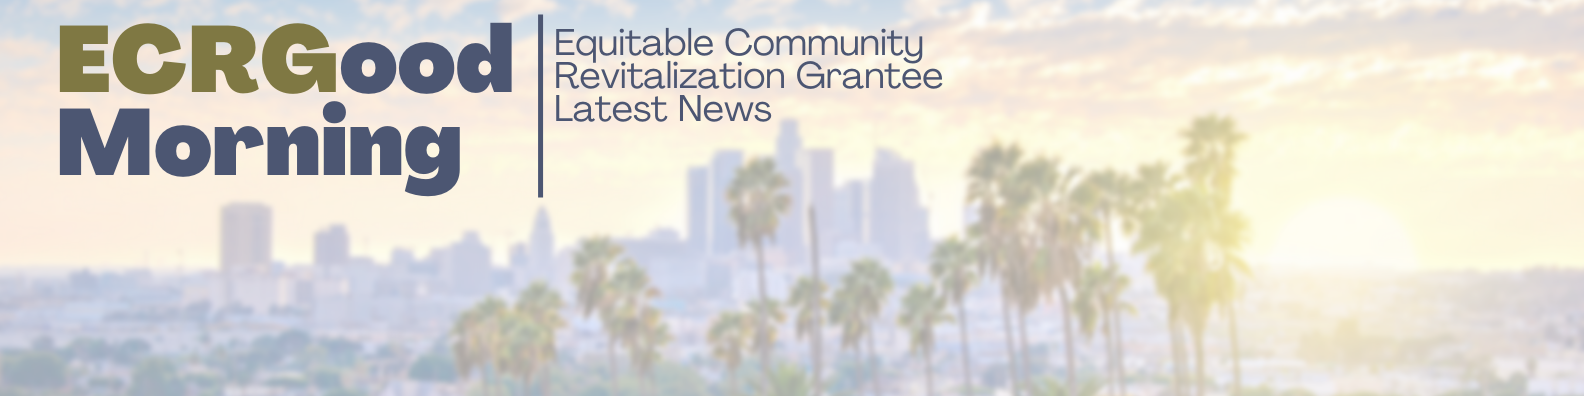 ECRGood Morning Equitable Community Revitalization Grant Latest News